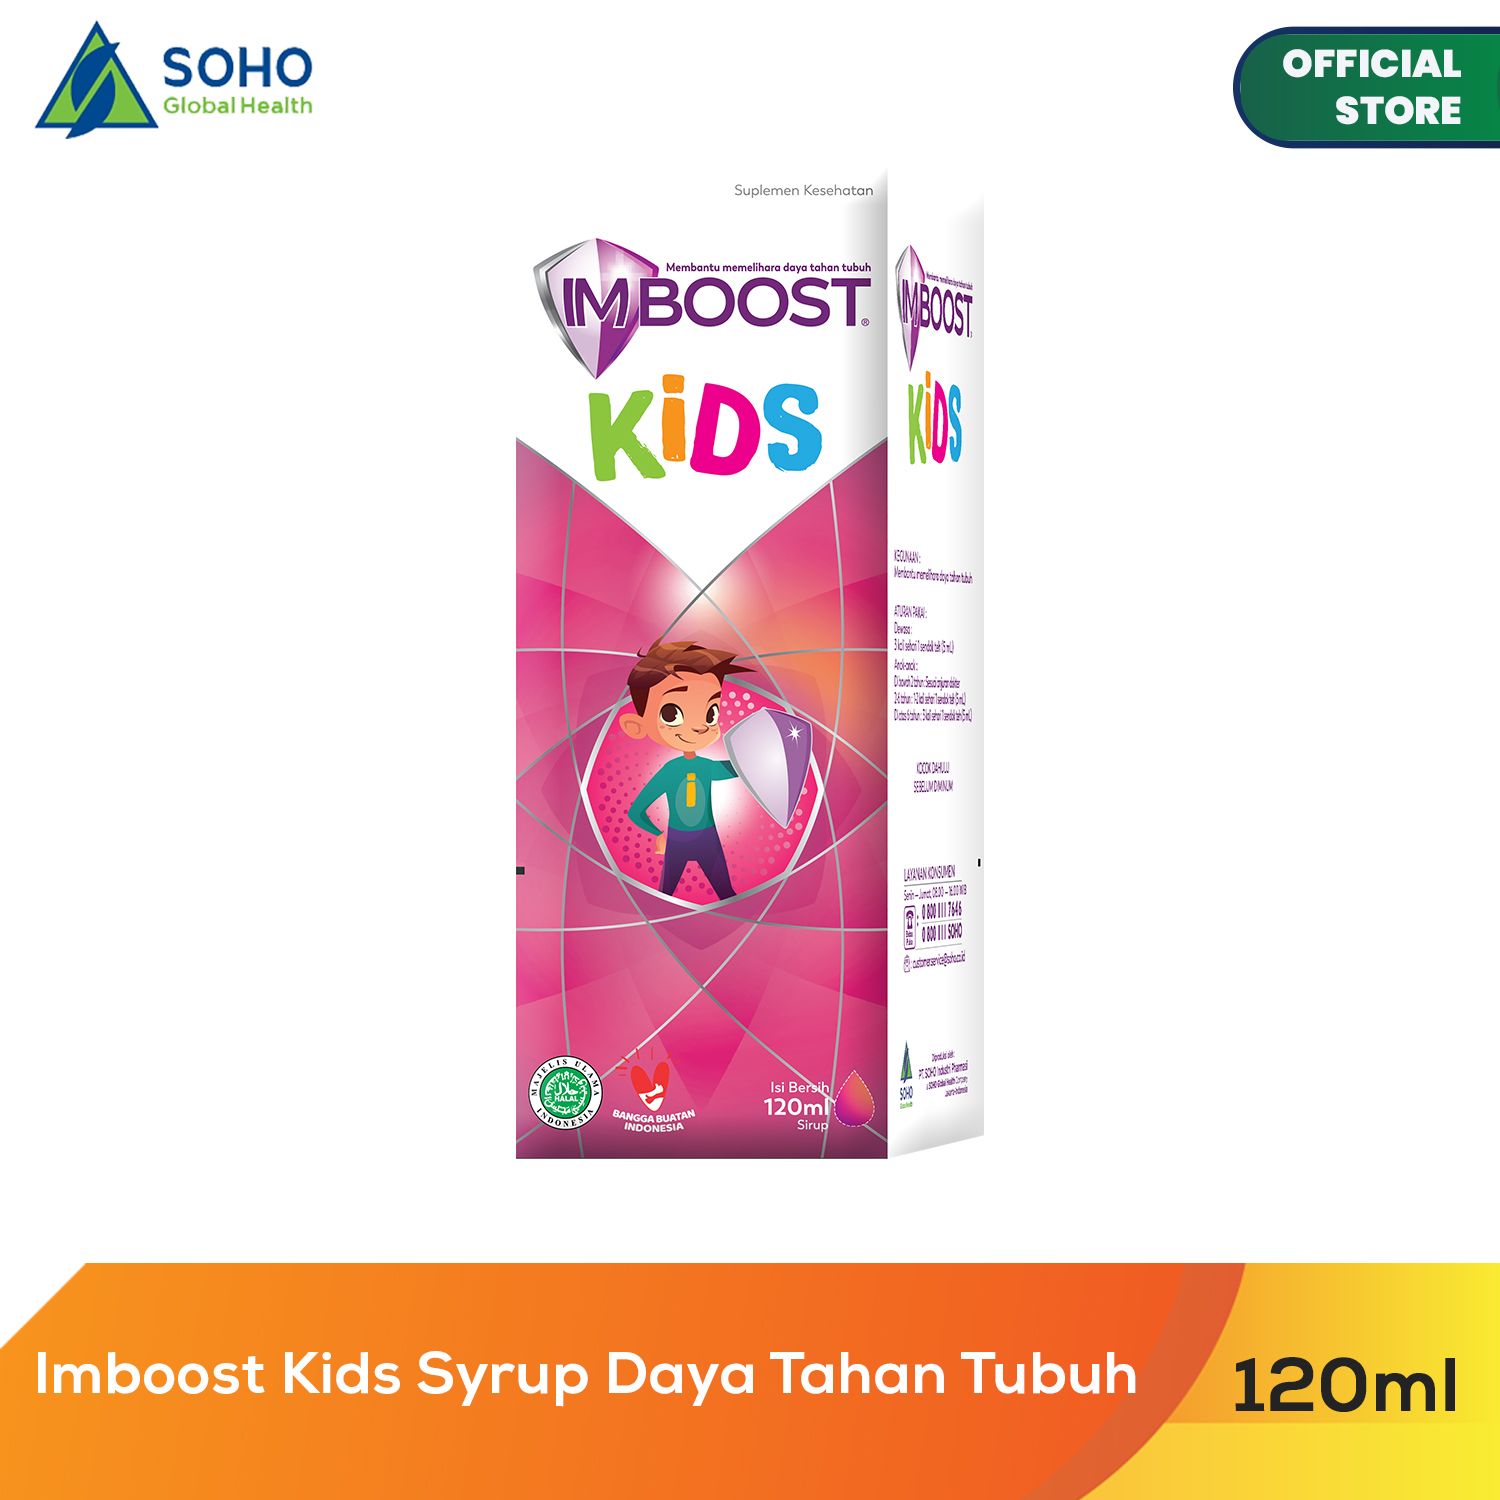 Imboost Kids Syrup Btl 120ml - 1